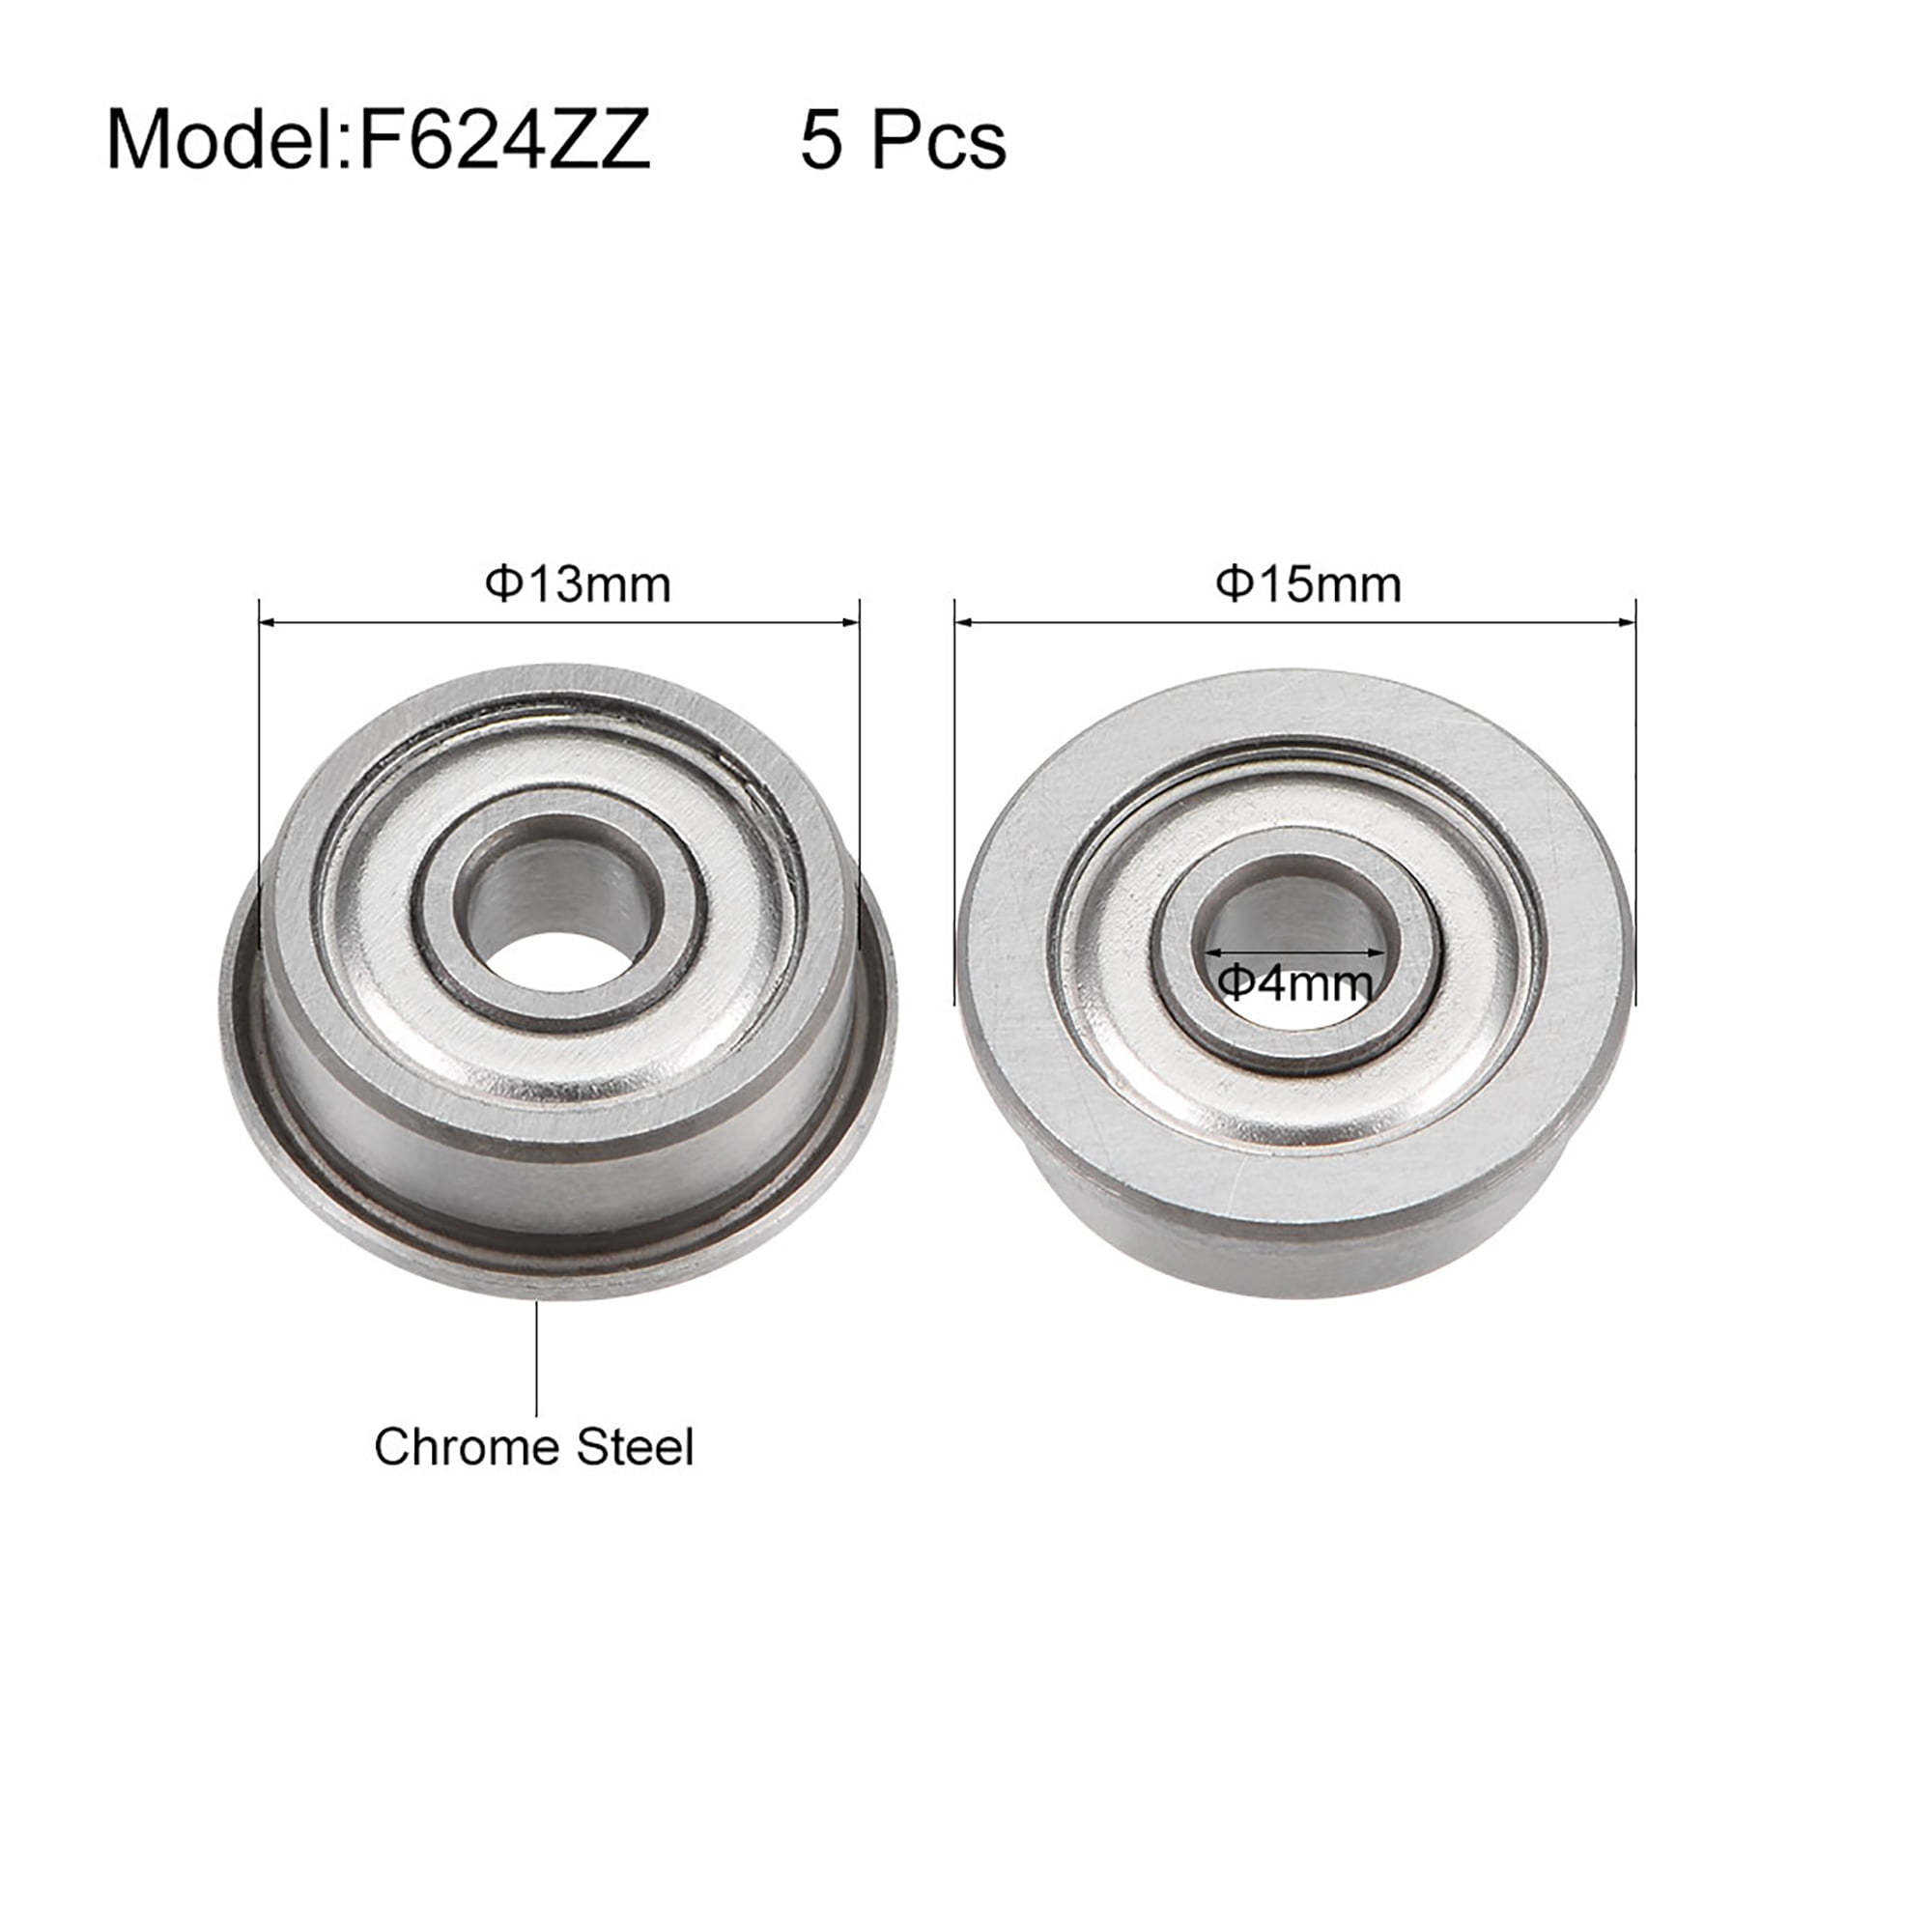 uxcell F604ZZ Flanged Ball Bearing 4x12x4mm Shielded Chrome Steel Bearings 5pcs 